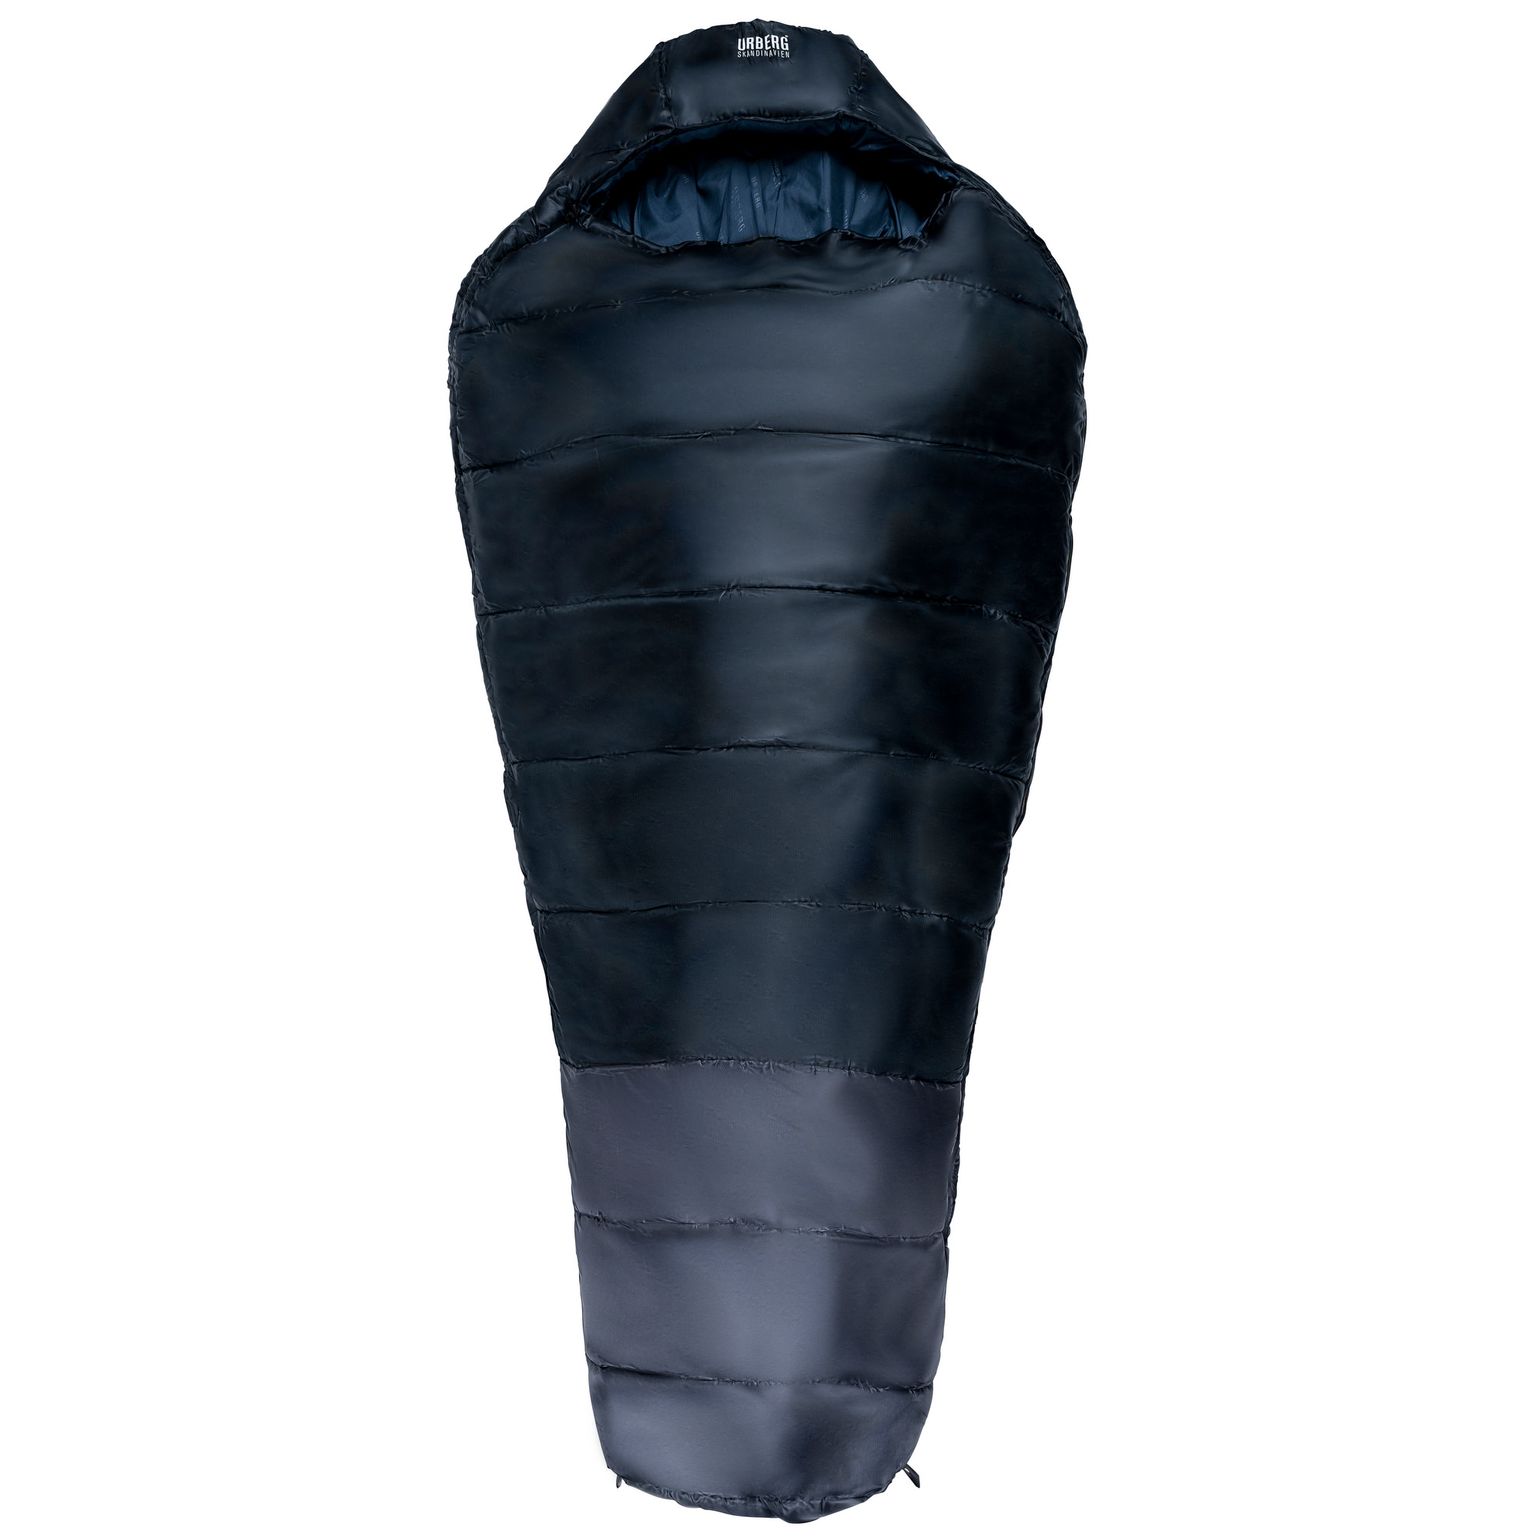 Extra Wide Sleeping Bag Black Beauty/Asphalt